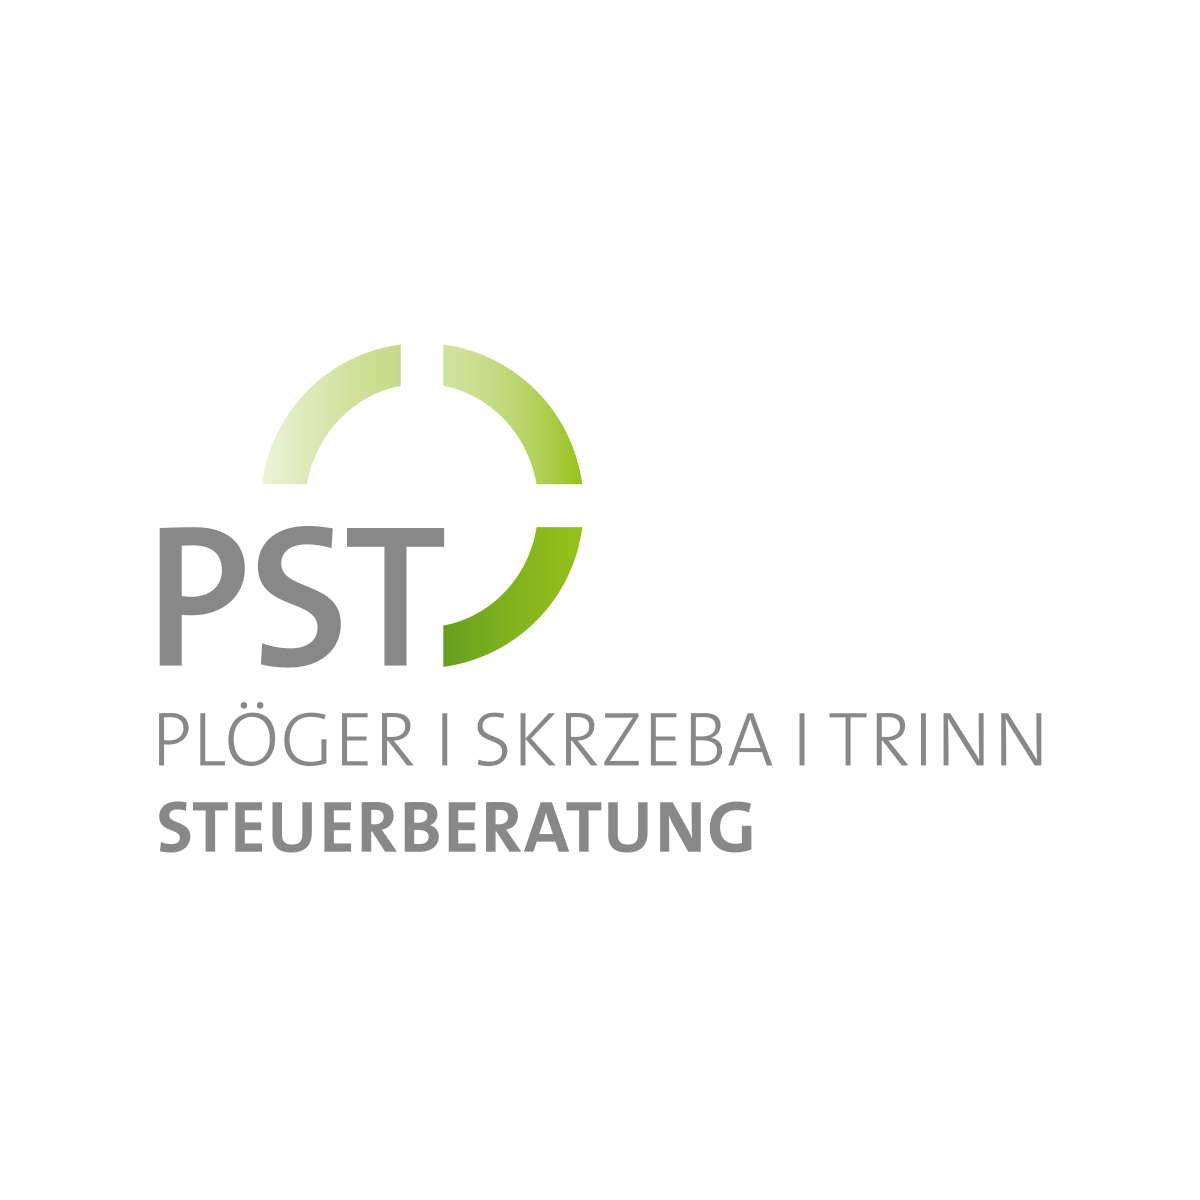 Steuerberatung in Paderborn - PST